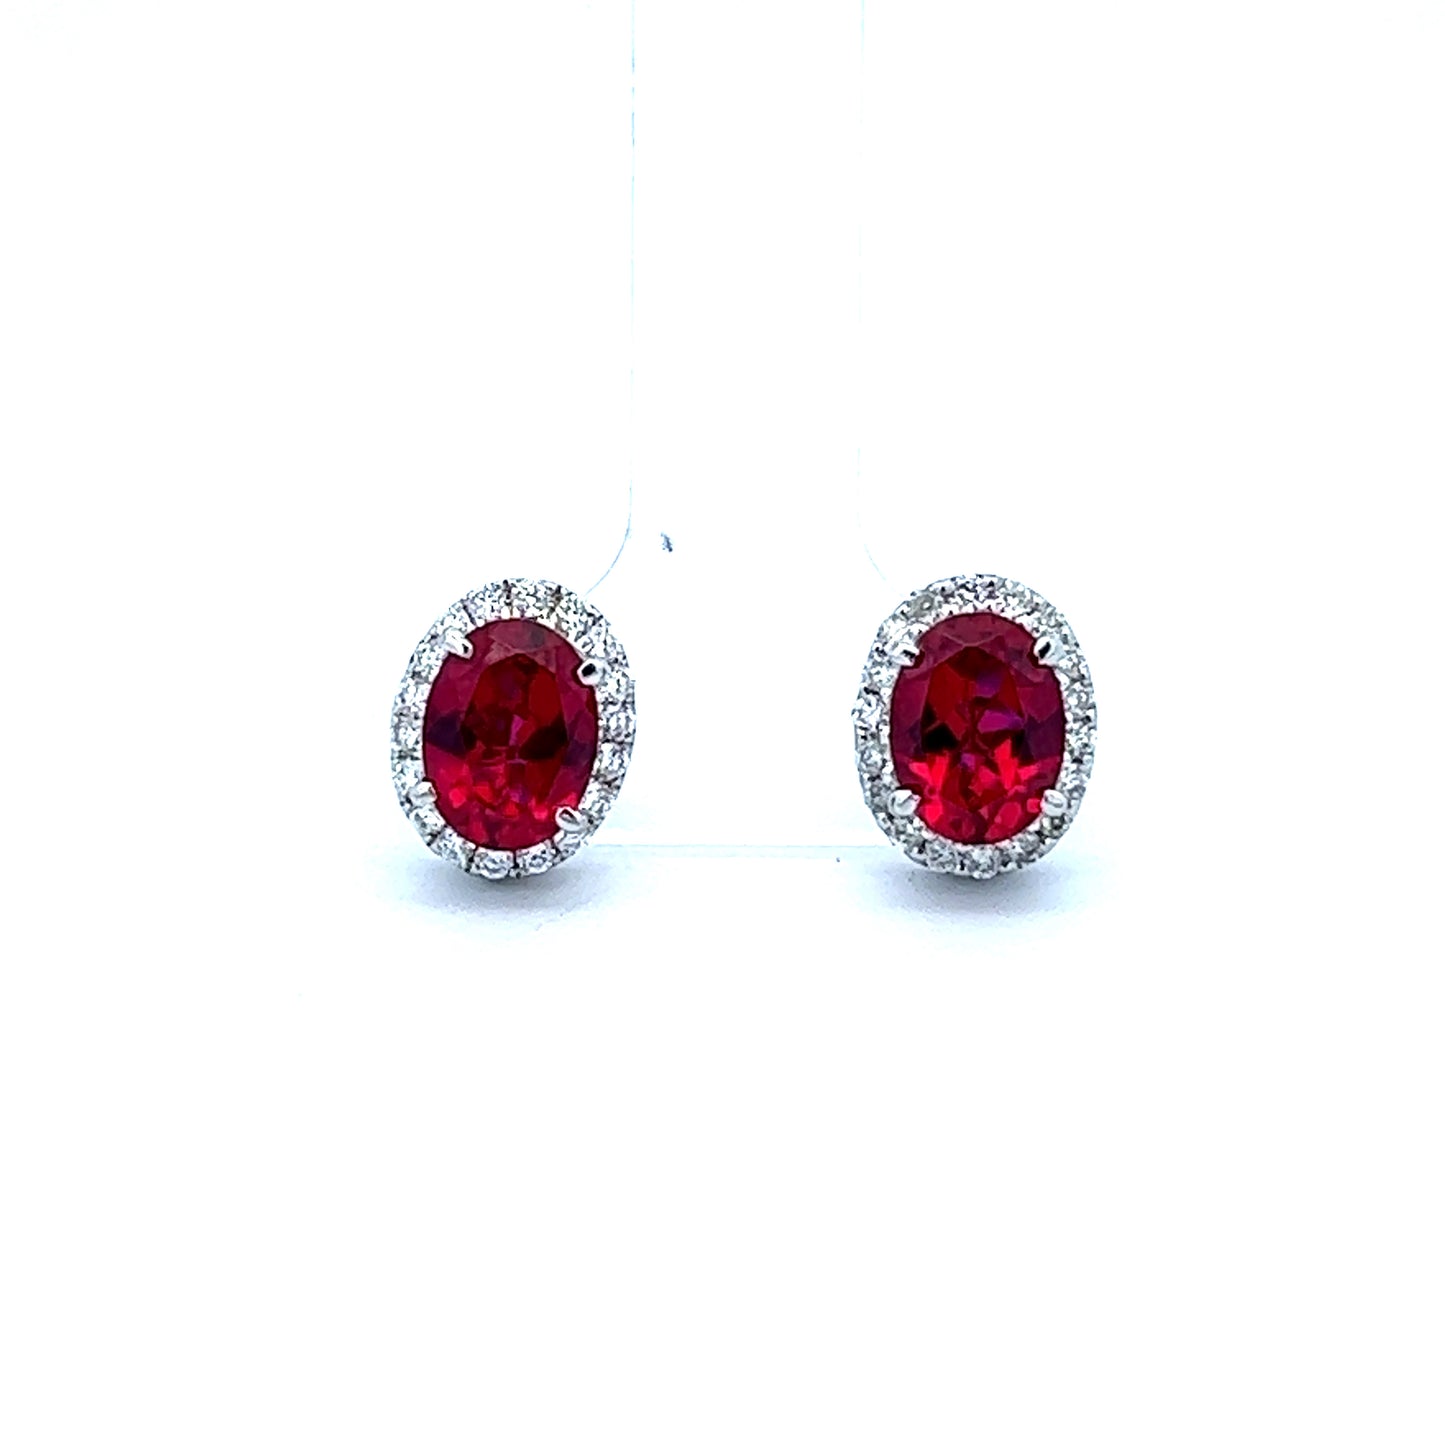 3ct Ruby and Diamond Earrings